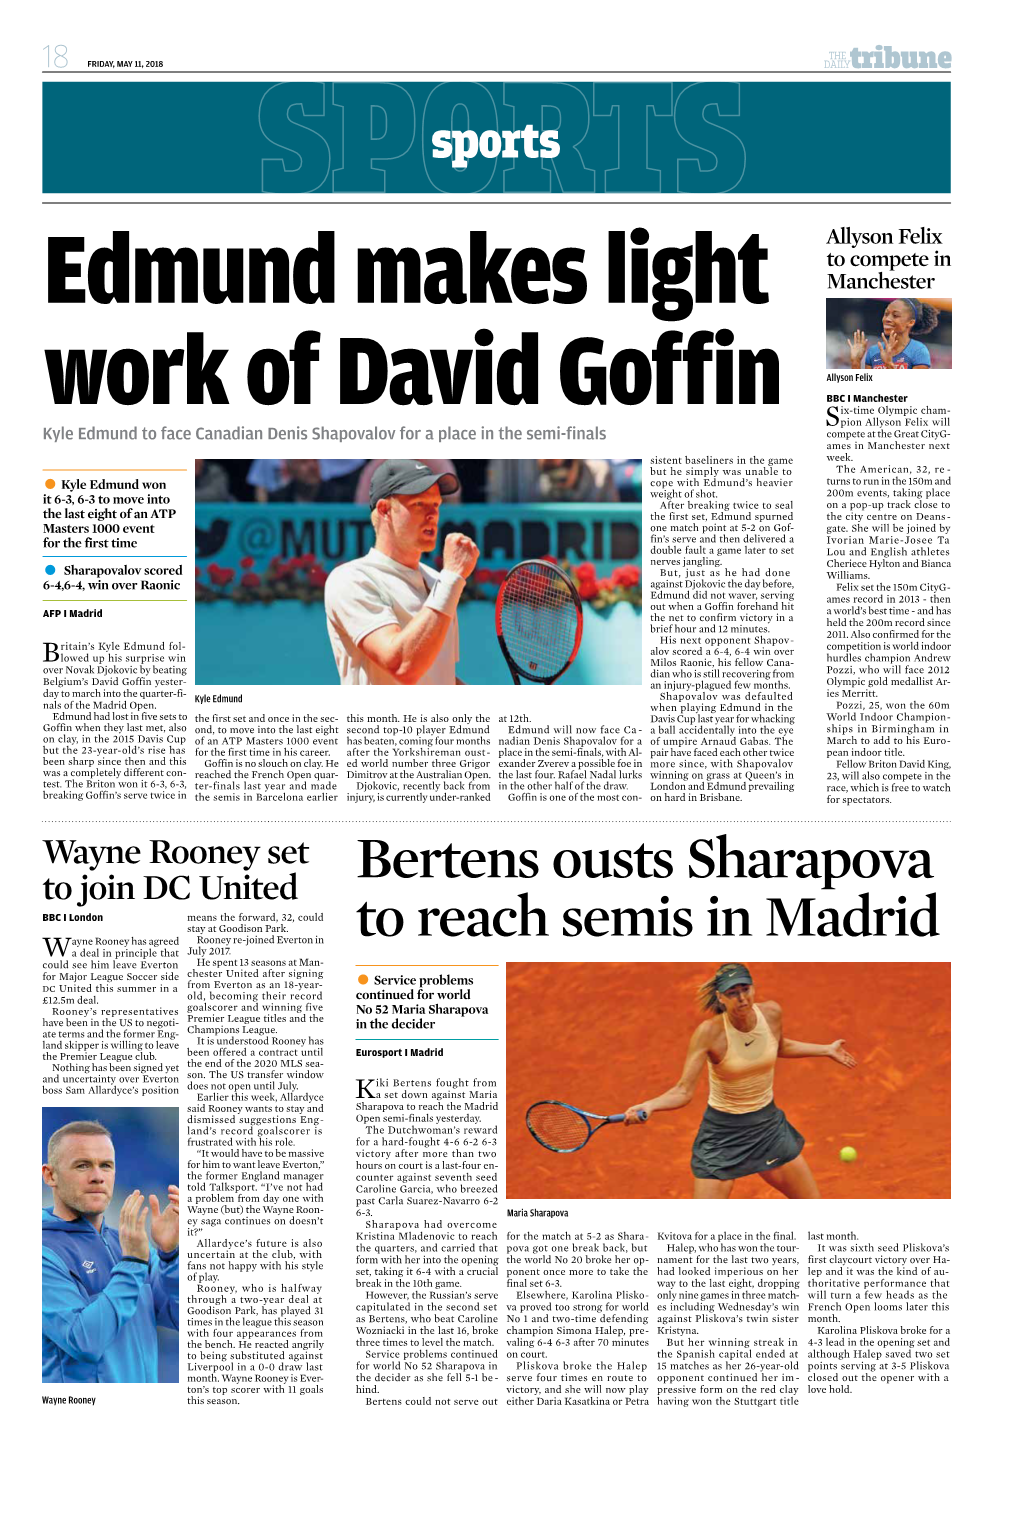 Bertens Ousts Sharapova to Reach Semis in Madrid